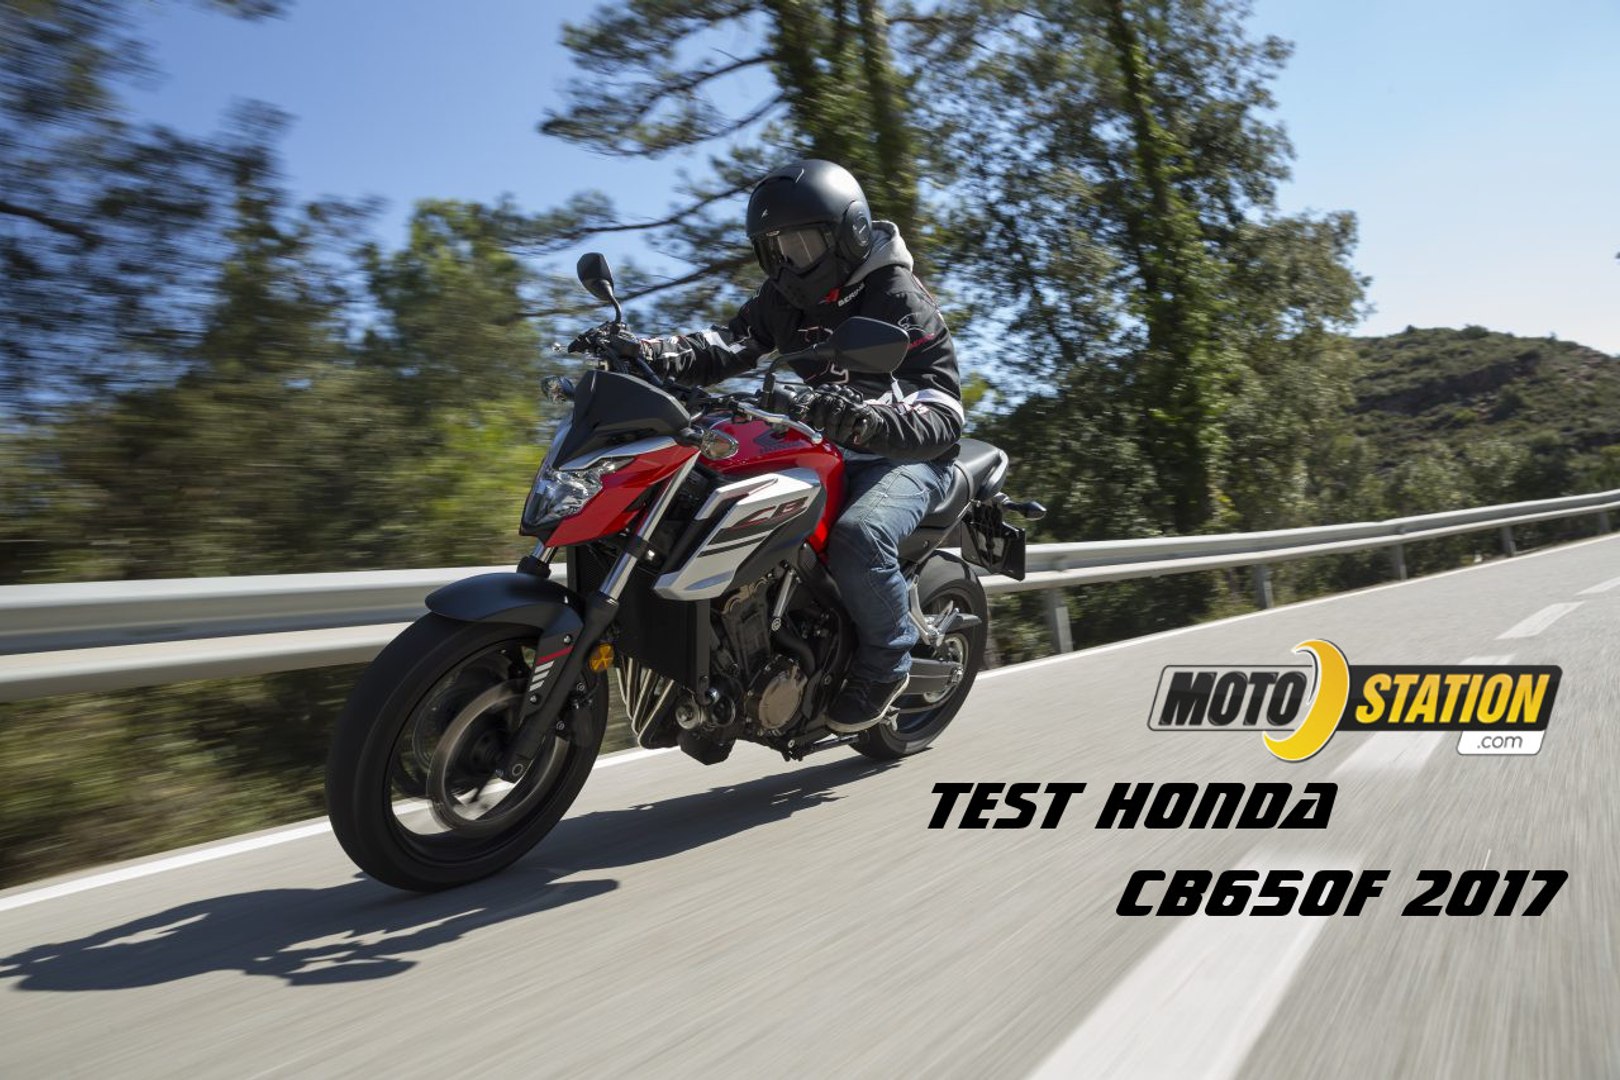 Test Honda CB650F 2017 - Vidéo Dailymotion